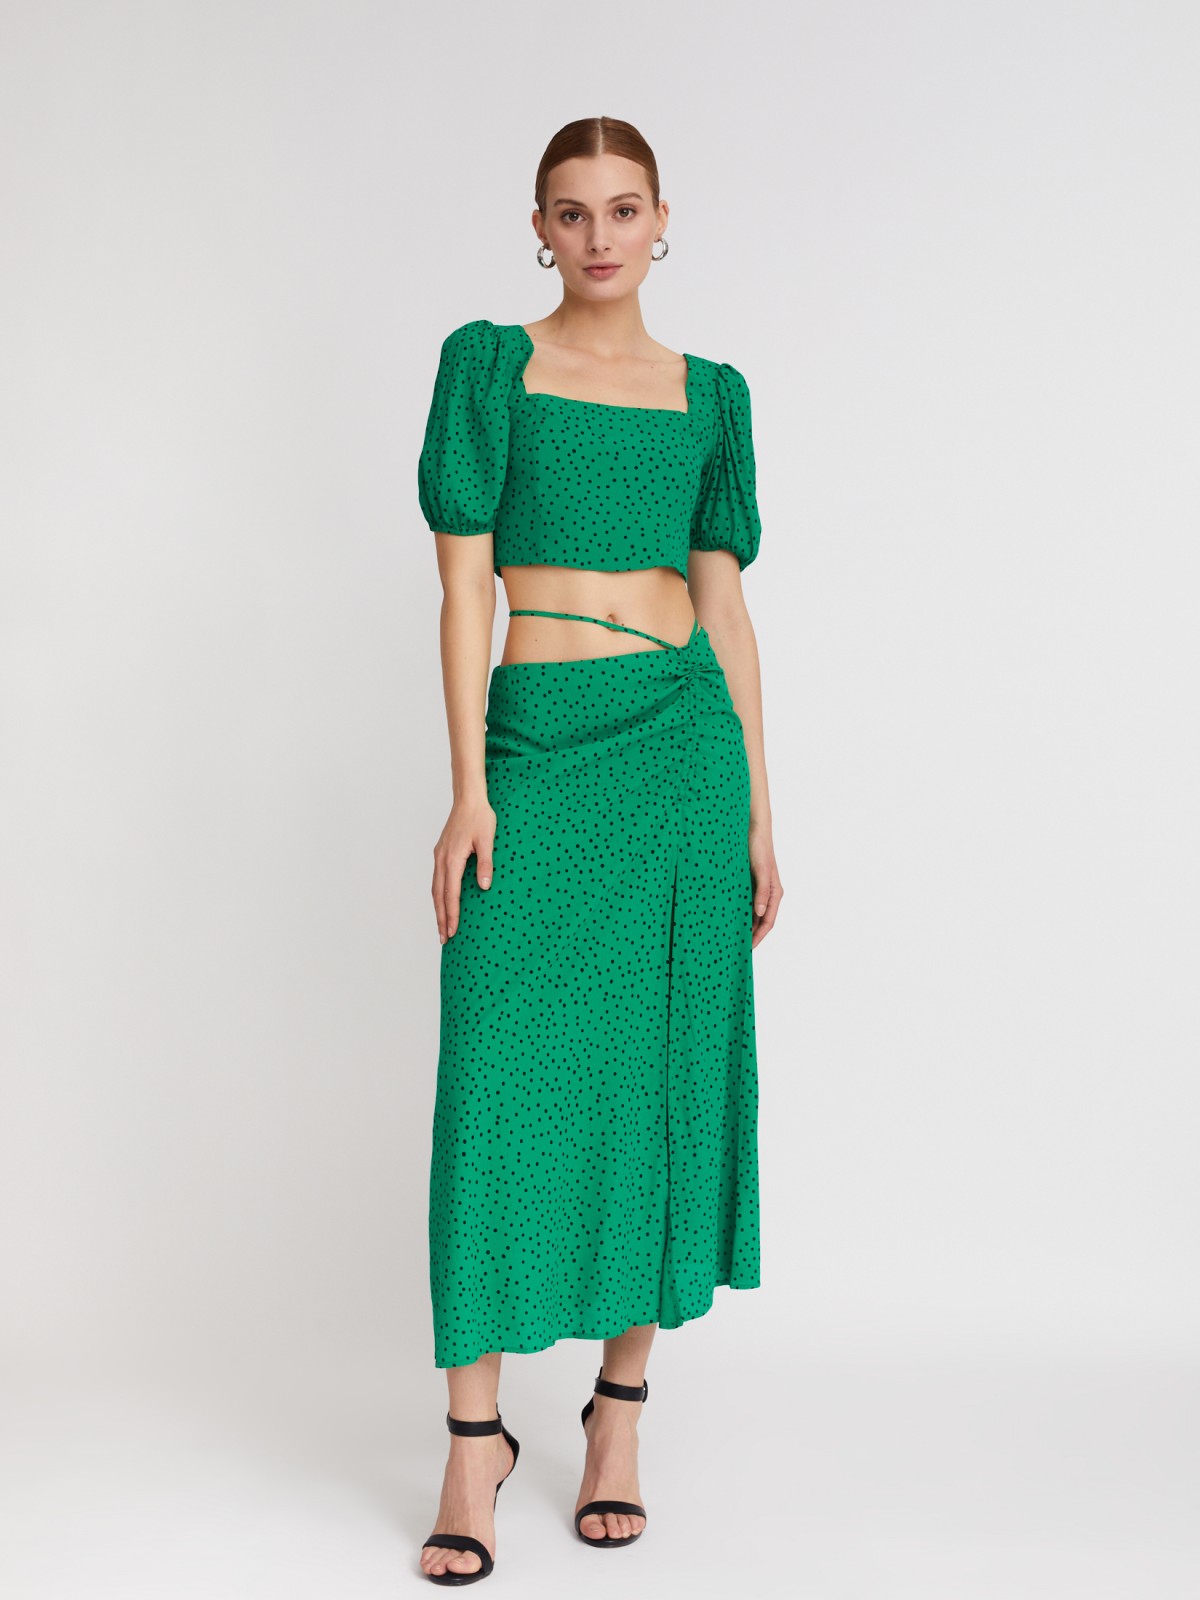 Блузка с короткими рукавами zolla 023241259061, цвет зеленый, размер XXS - фото 2